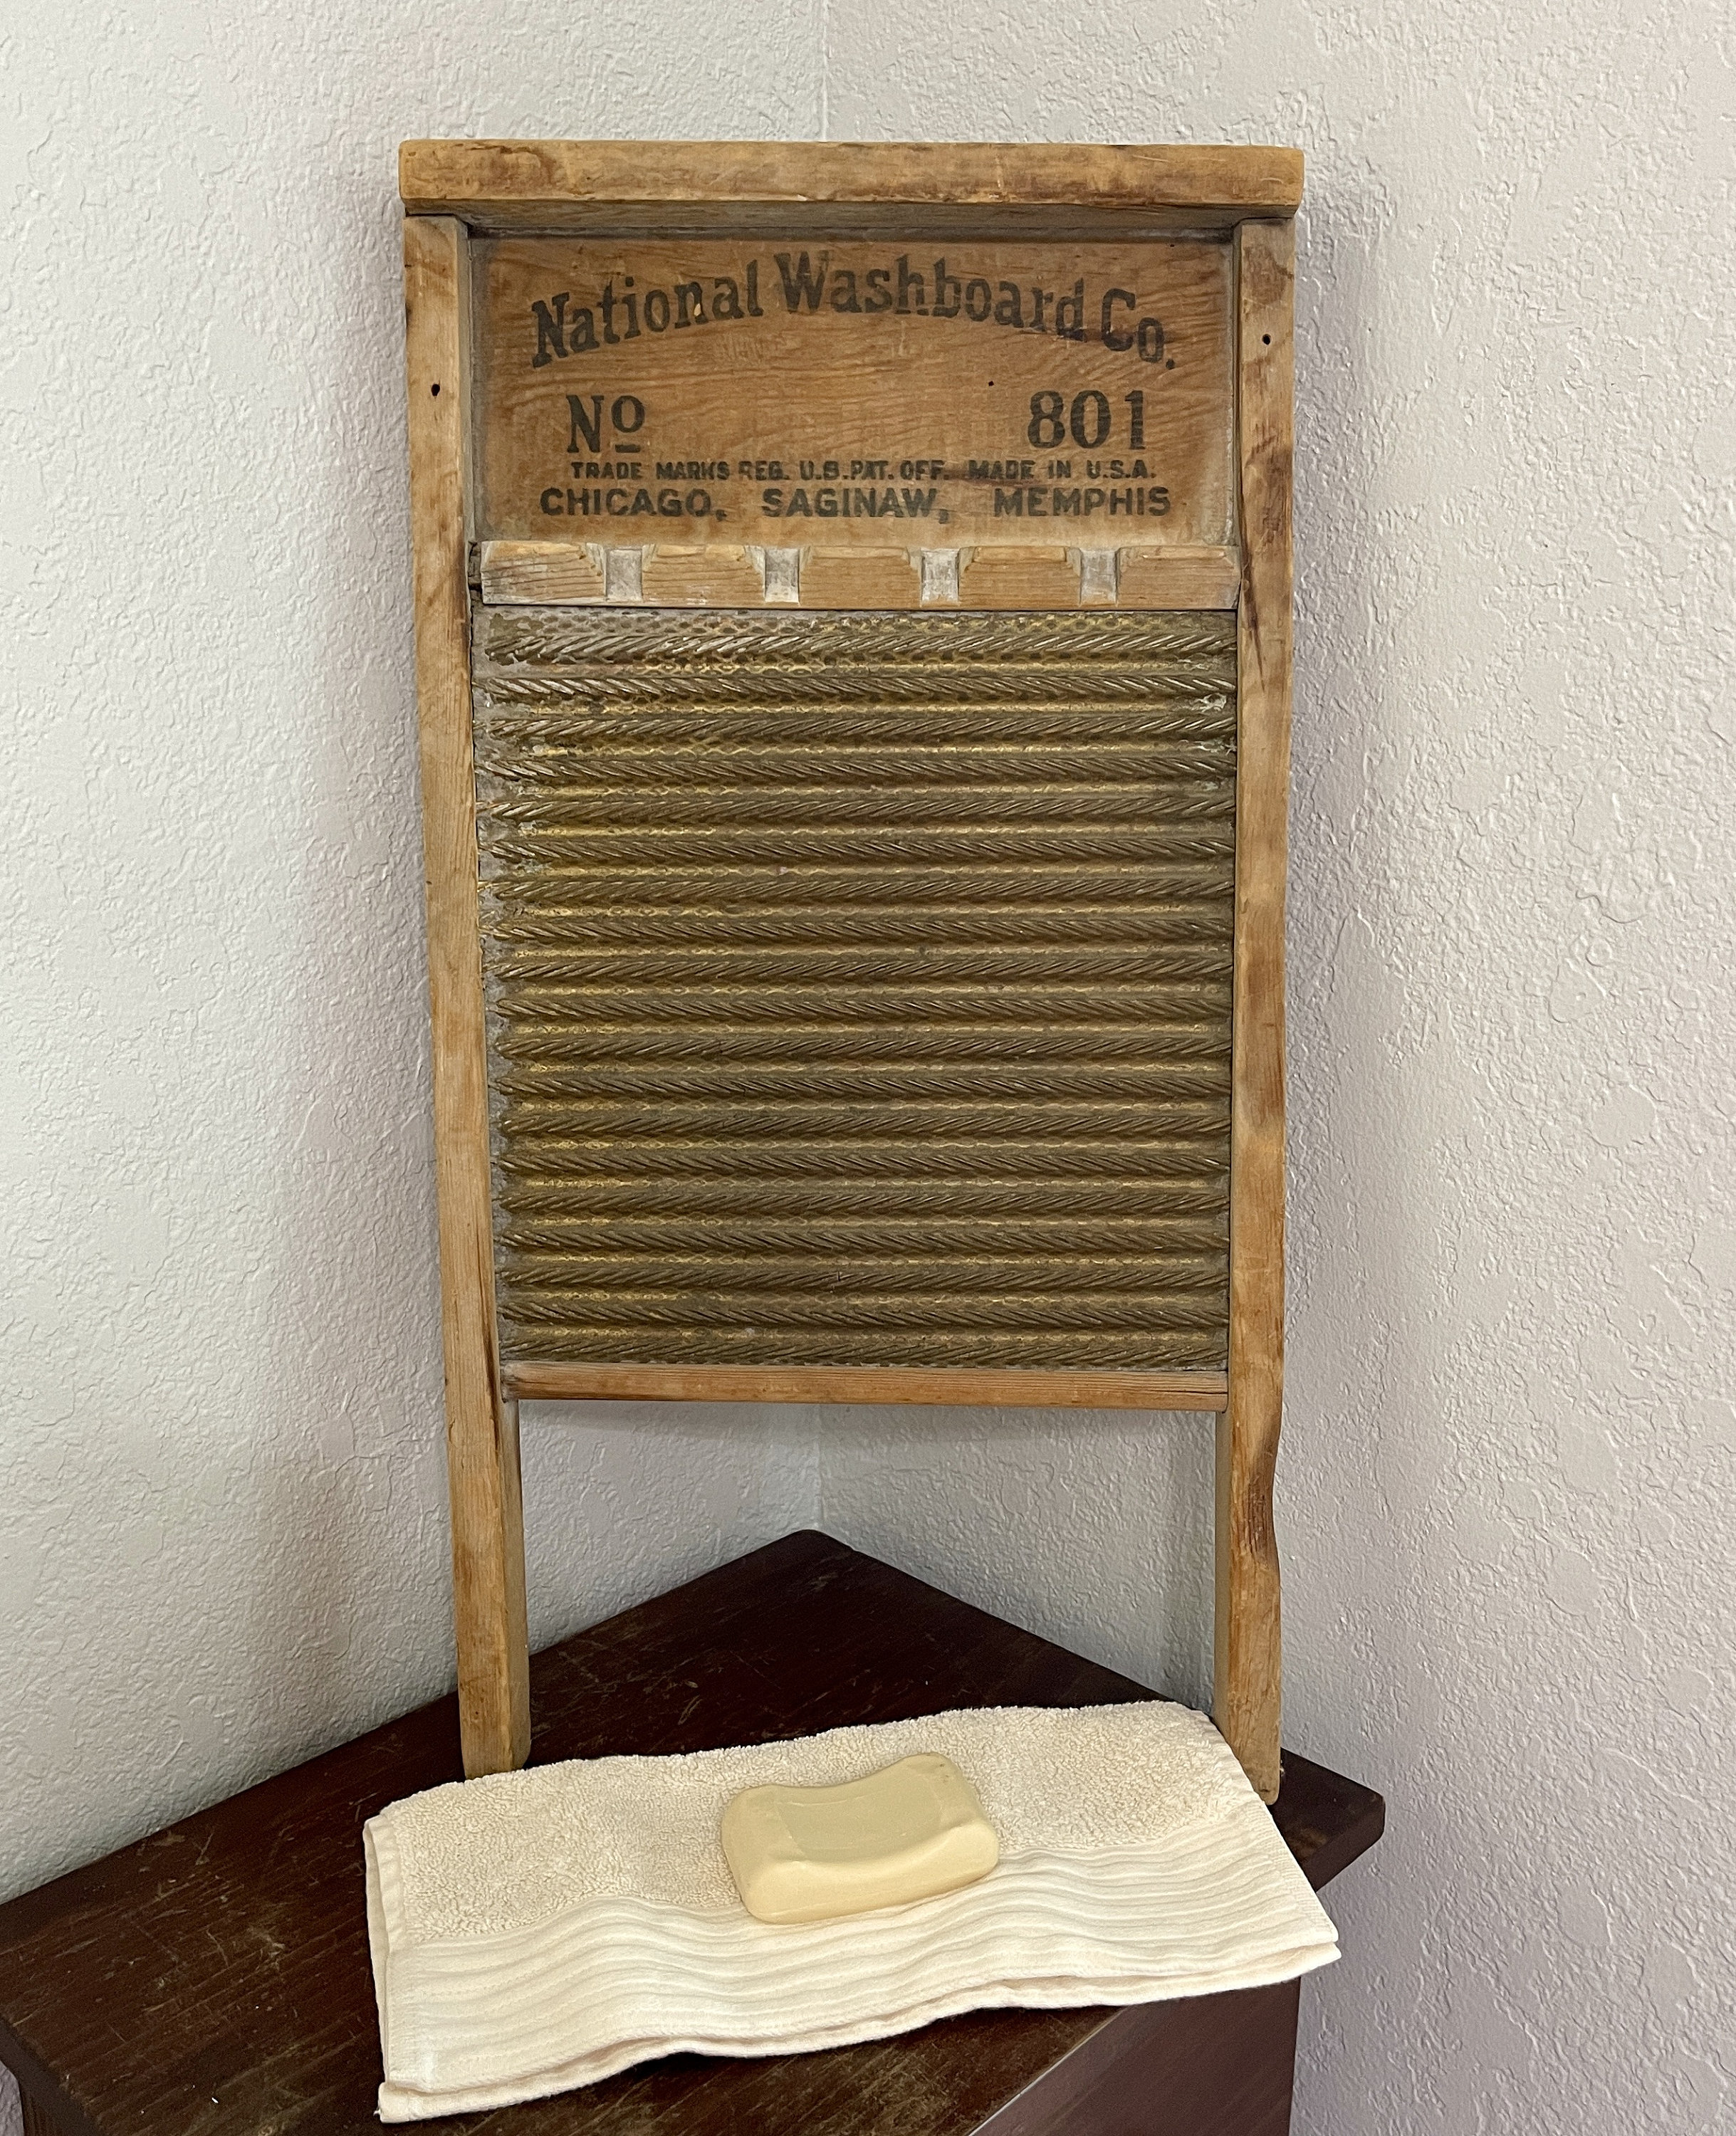 Antique National Washboard Co No 2 Washboard w/ 2 sides of artwork  (original)